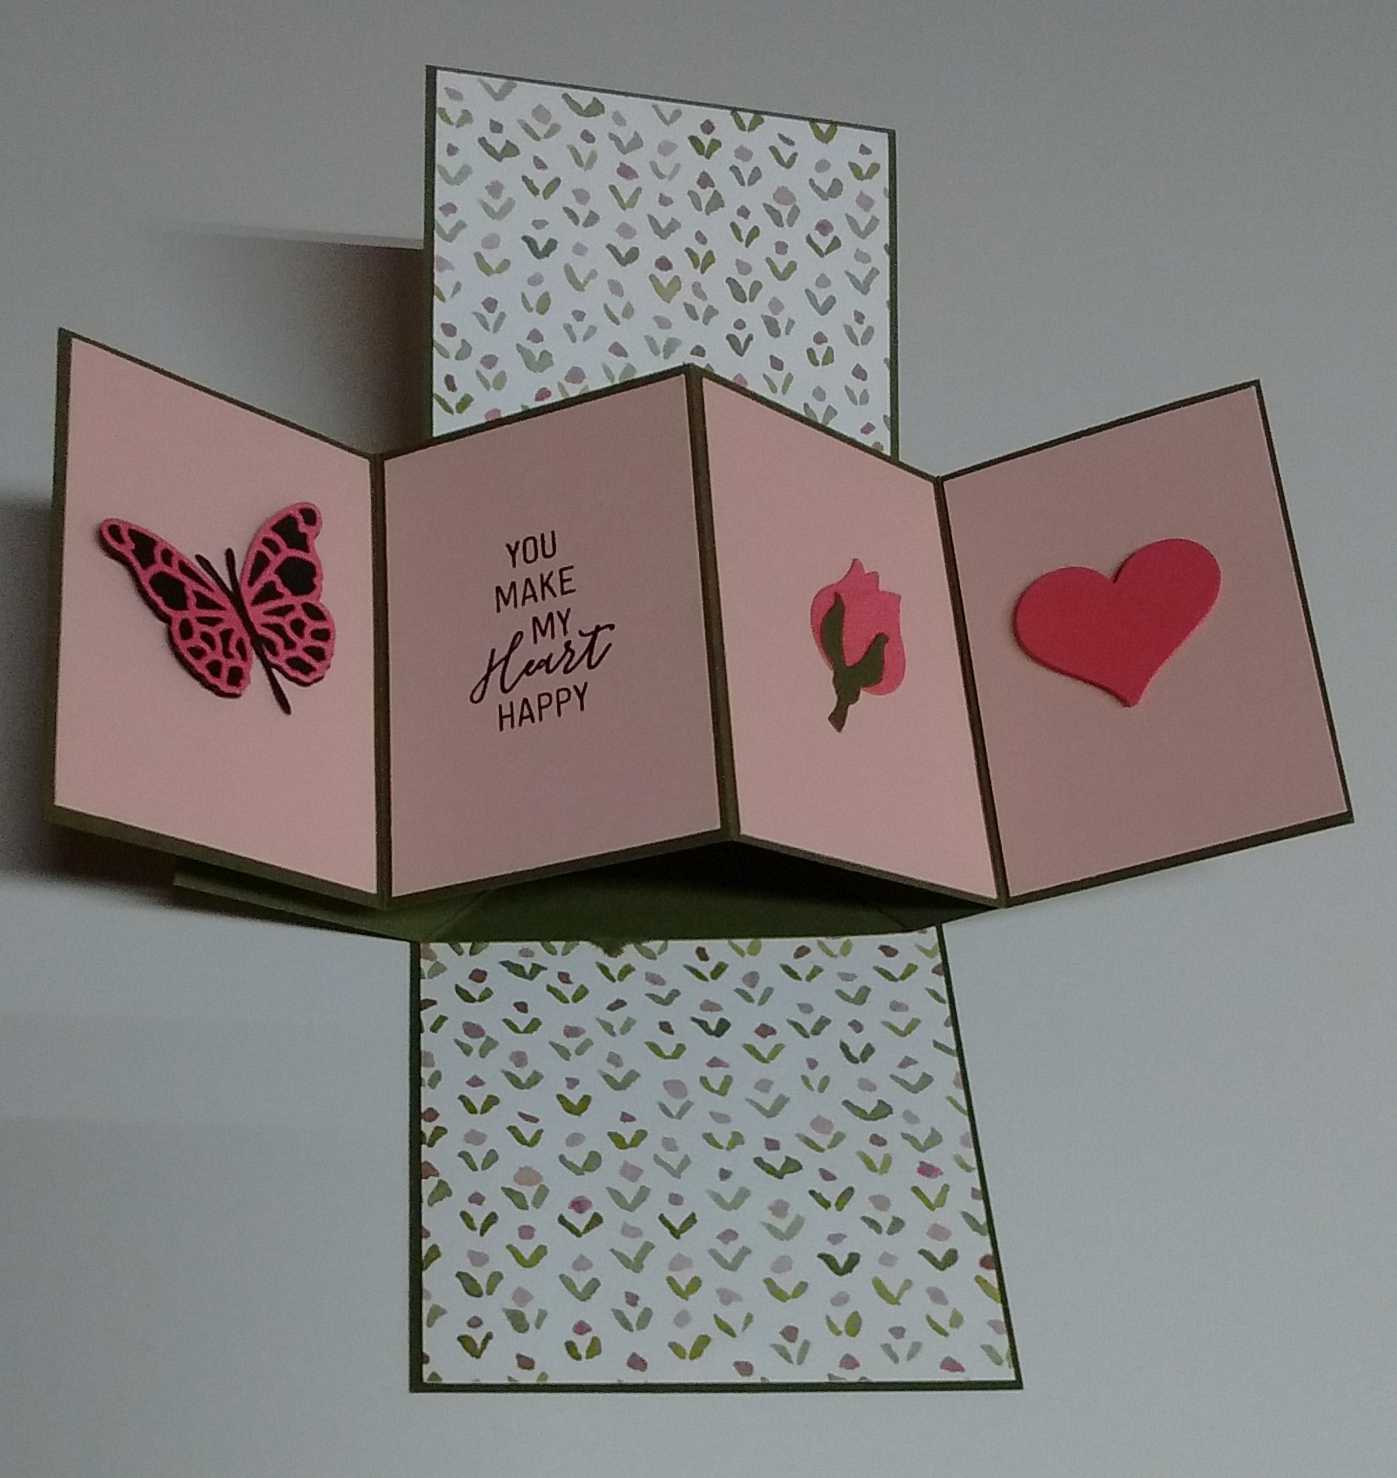 039 1510098453 Iwzdikn9U9 Template Ideas Pop Up Cards Intended For 3D Heart Pop Up Card Template Pdf